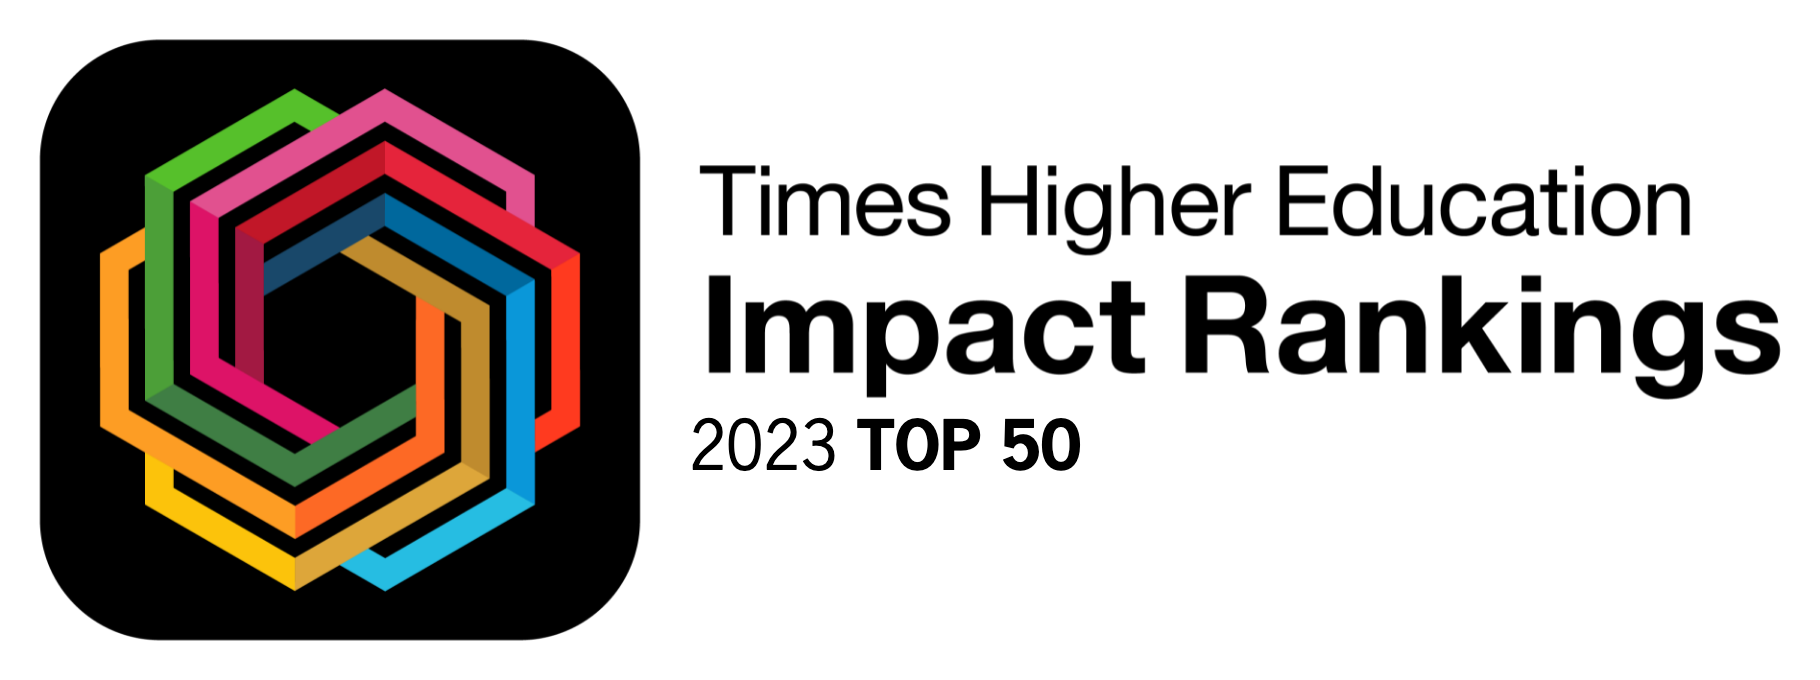 THE Impact Rankings 2023